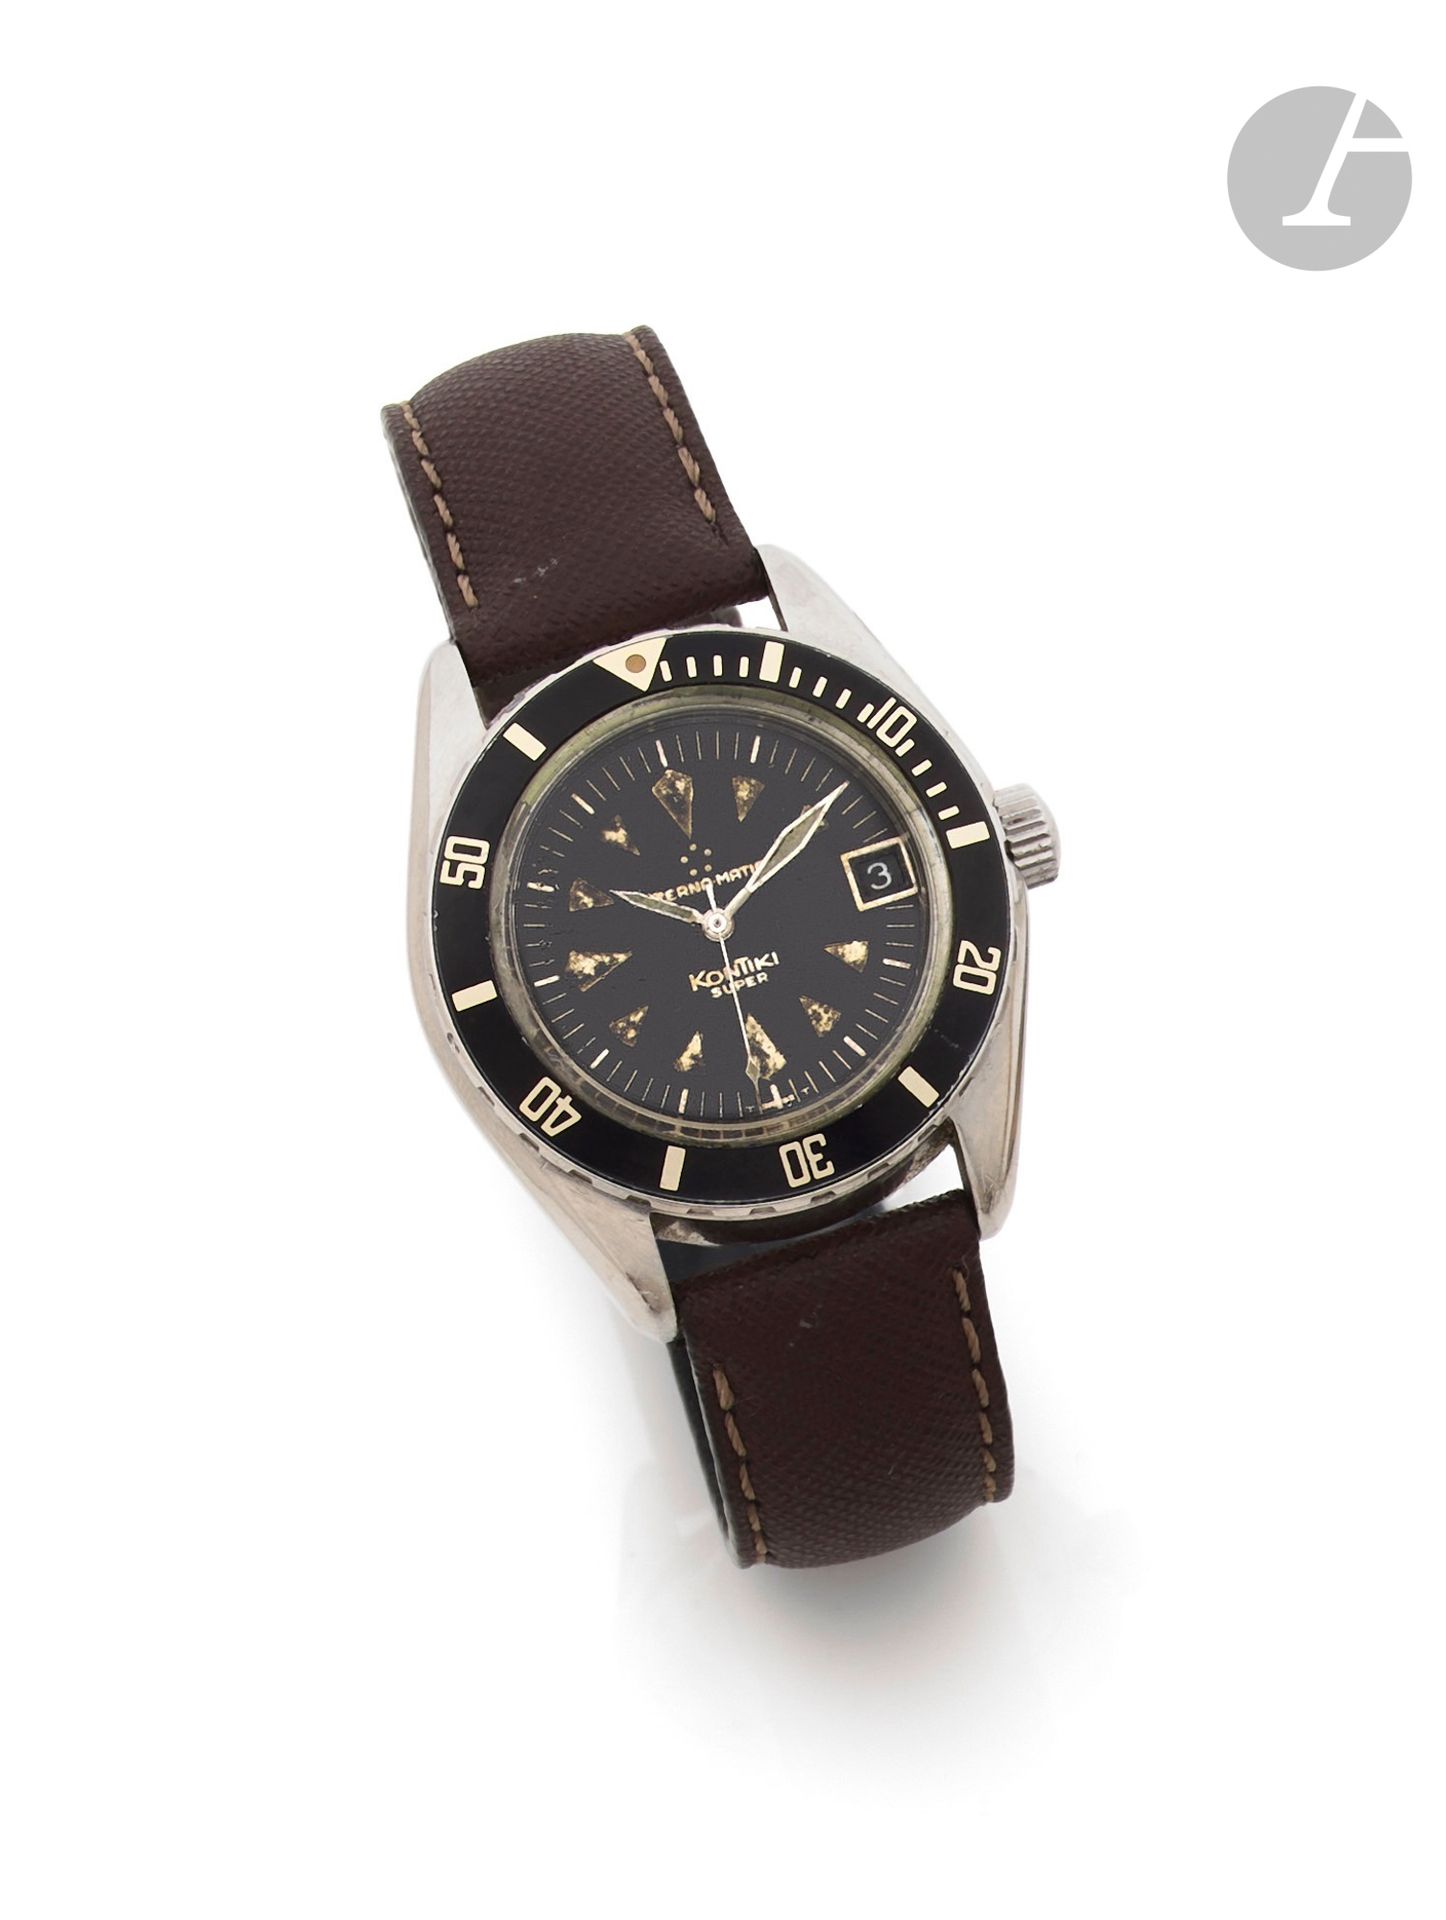 Null ETERNA-MATIC
KONTIKI SUPER
60's
Vintage diving watch in steel on leather.
C&hellip;